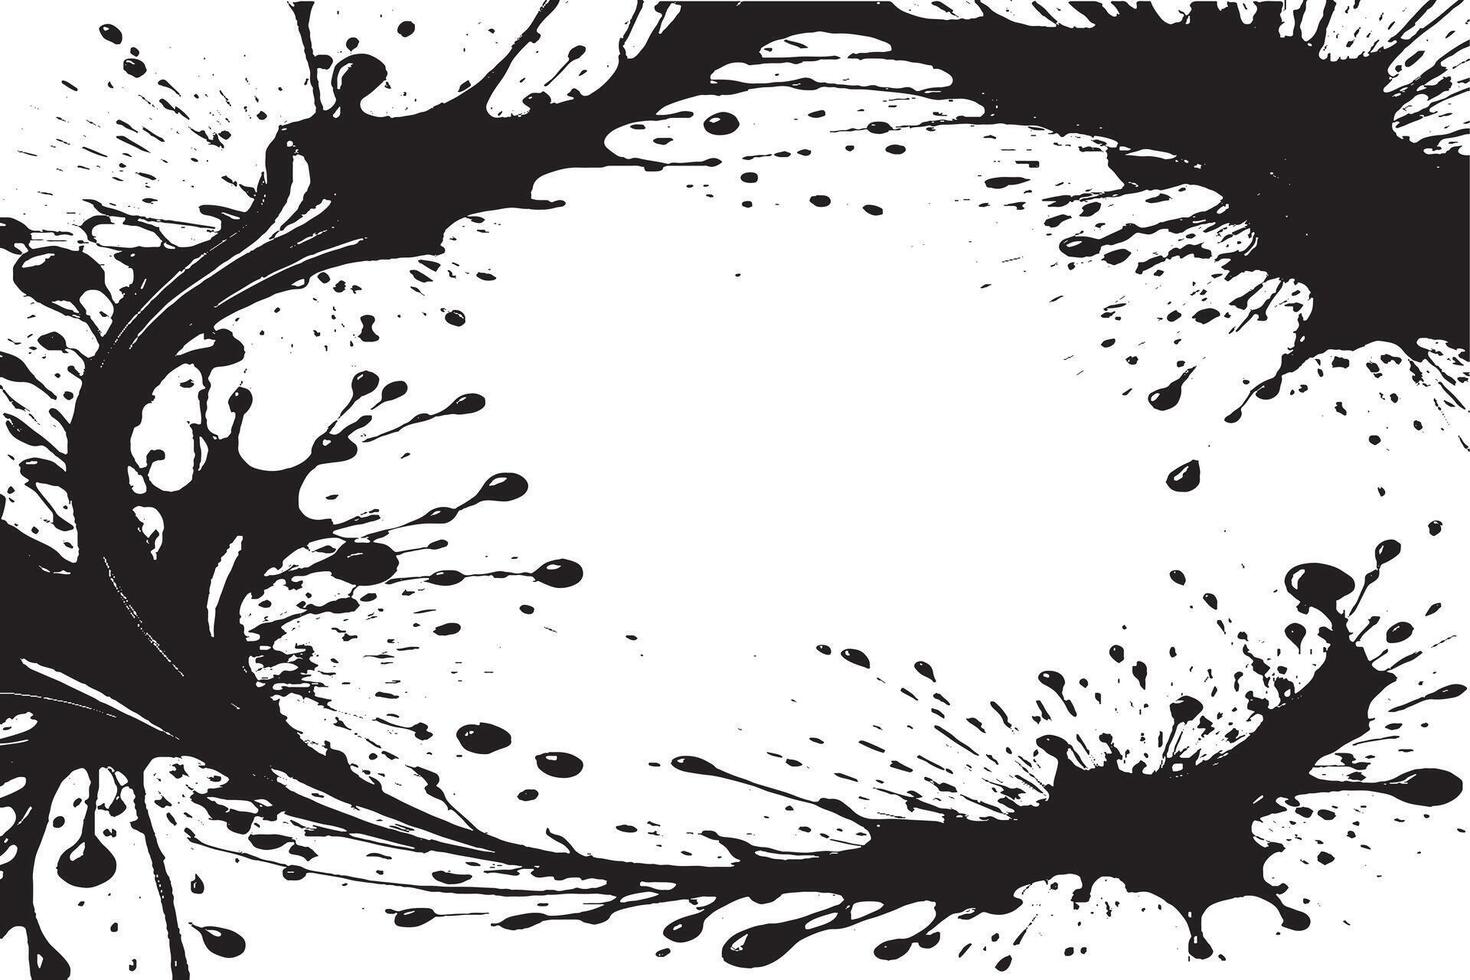 black ink splashes on white canvas monochrome background texture vector